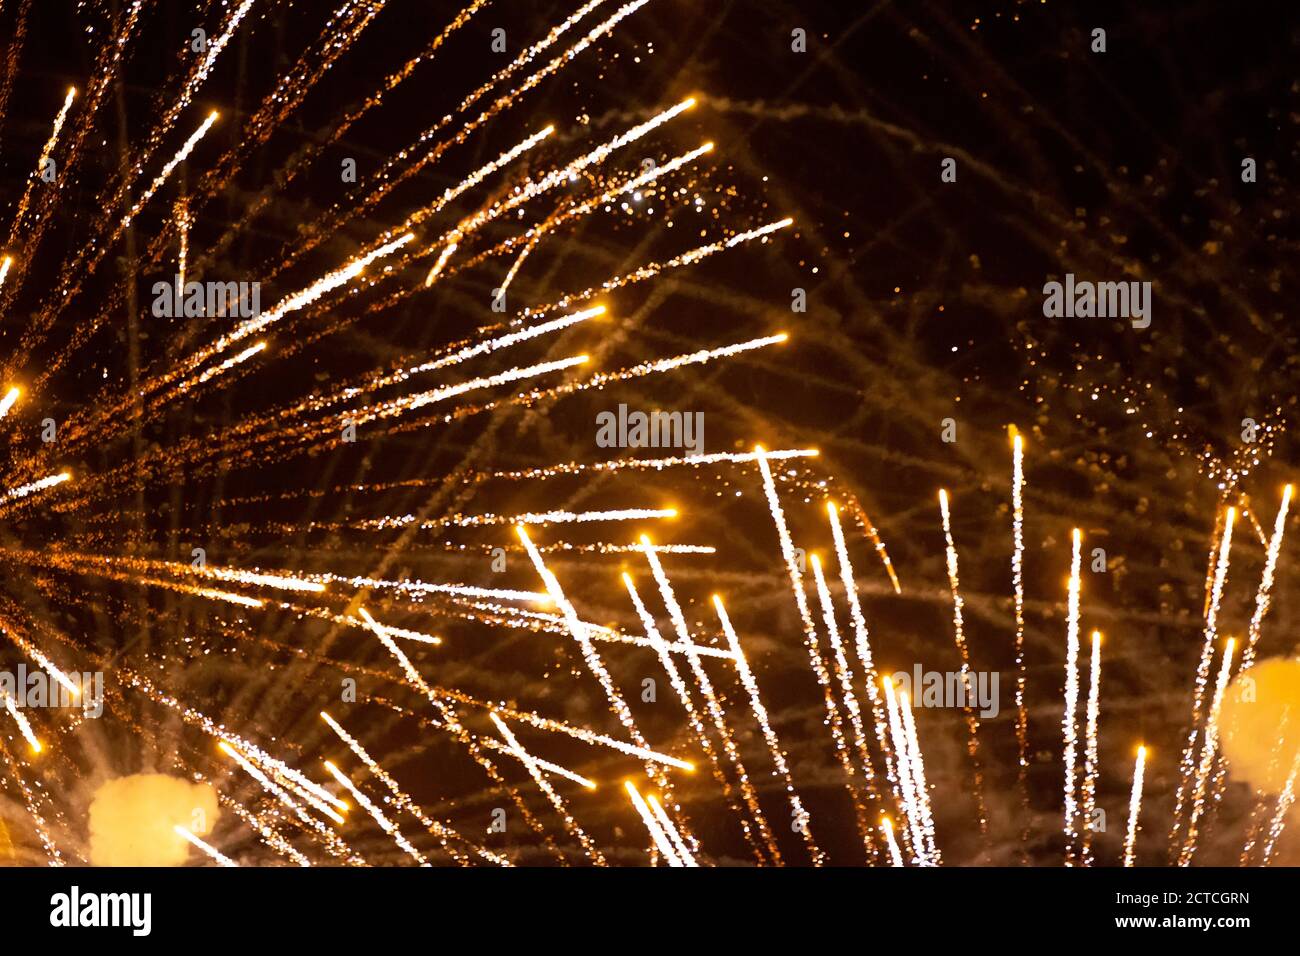 Festive background golden rays of fireworks on a dark background. Stock Photo